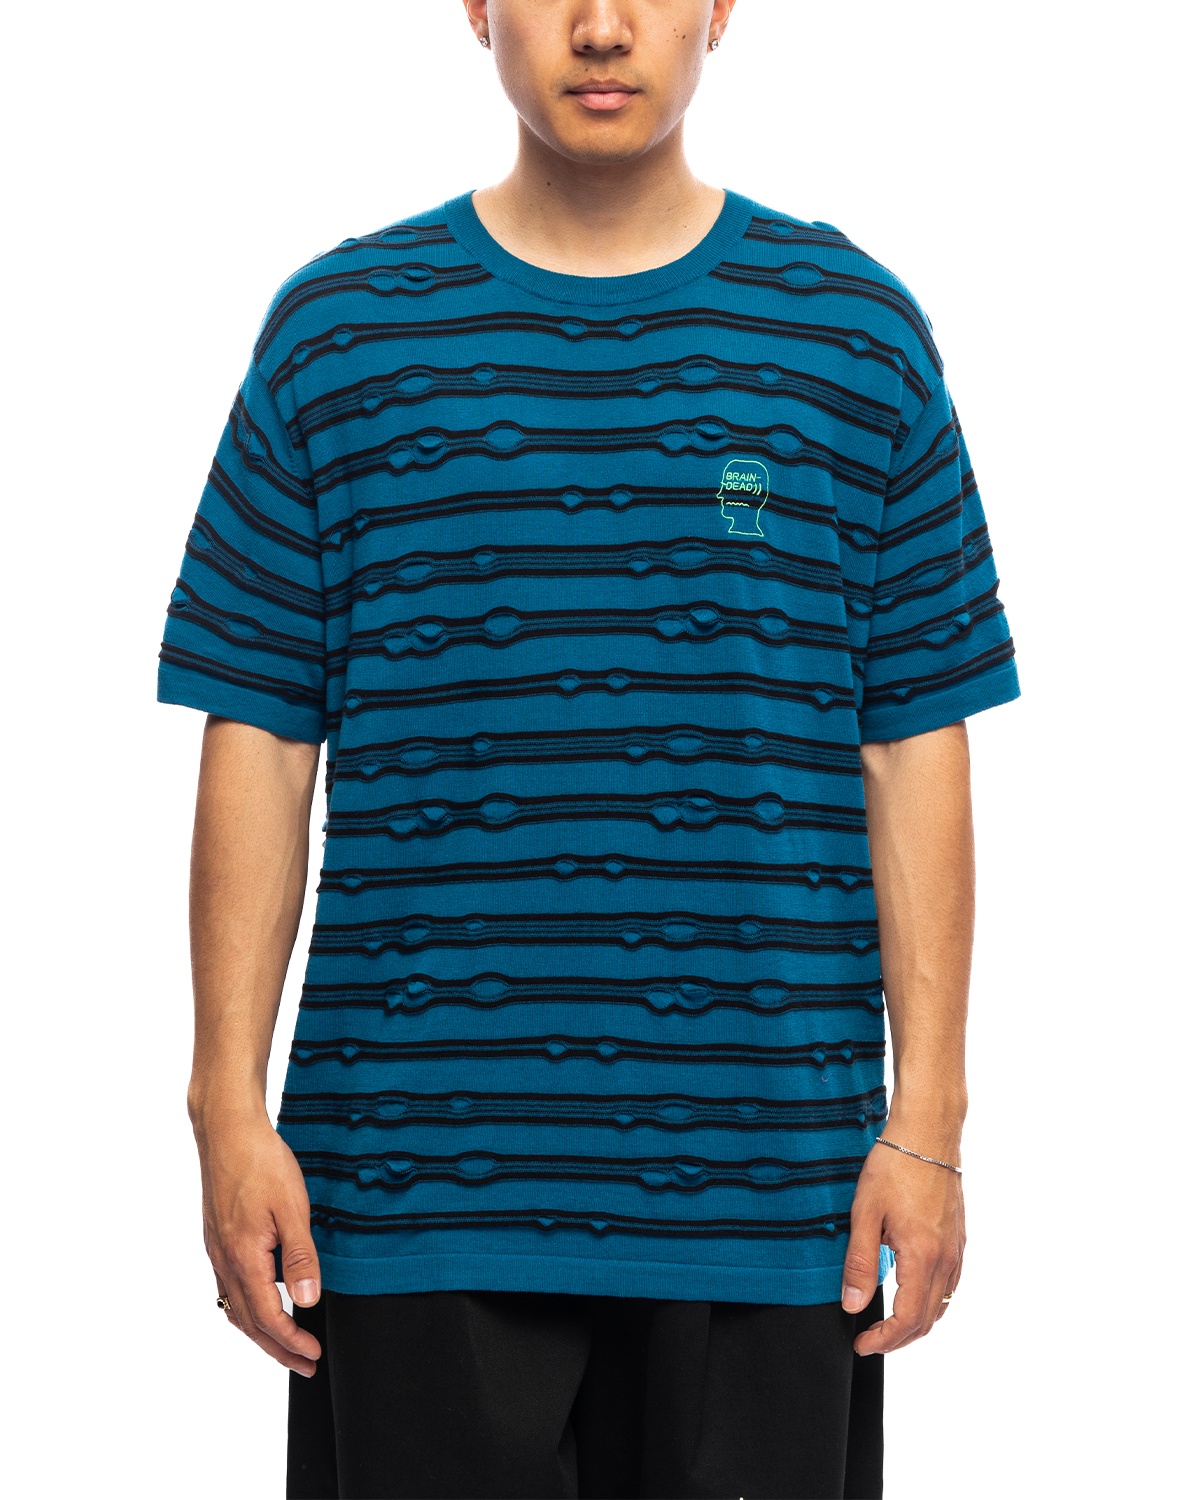 Puckered Striped T-shirt Teal